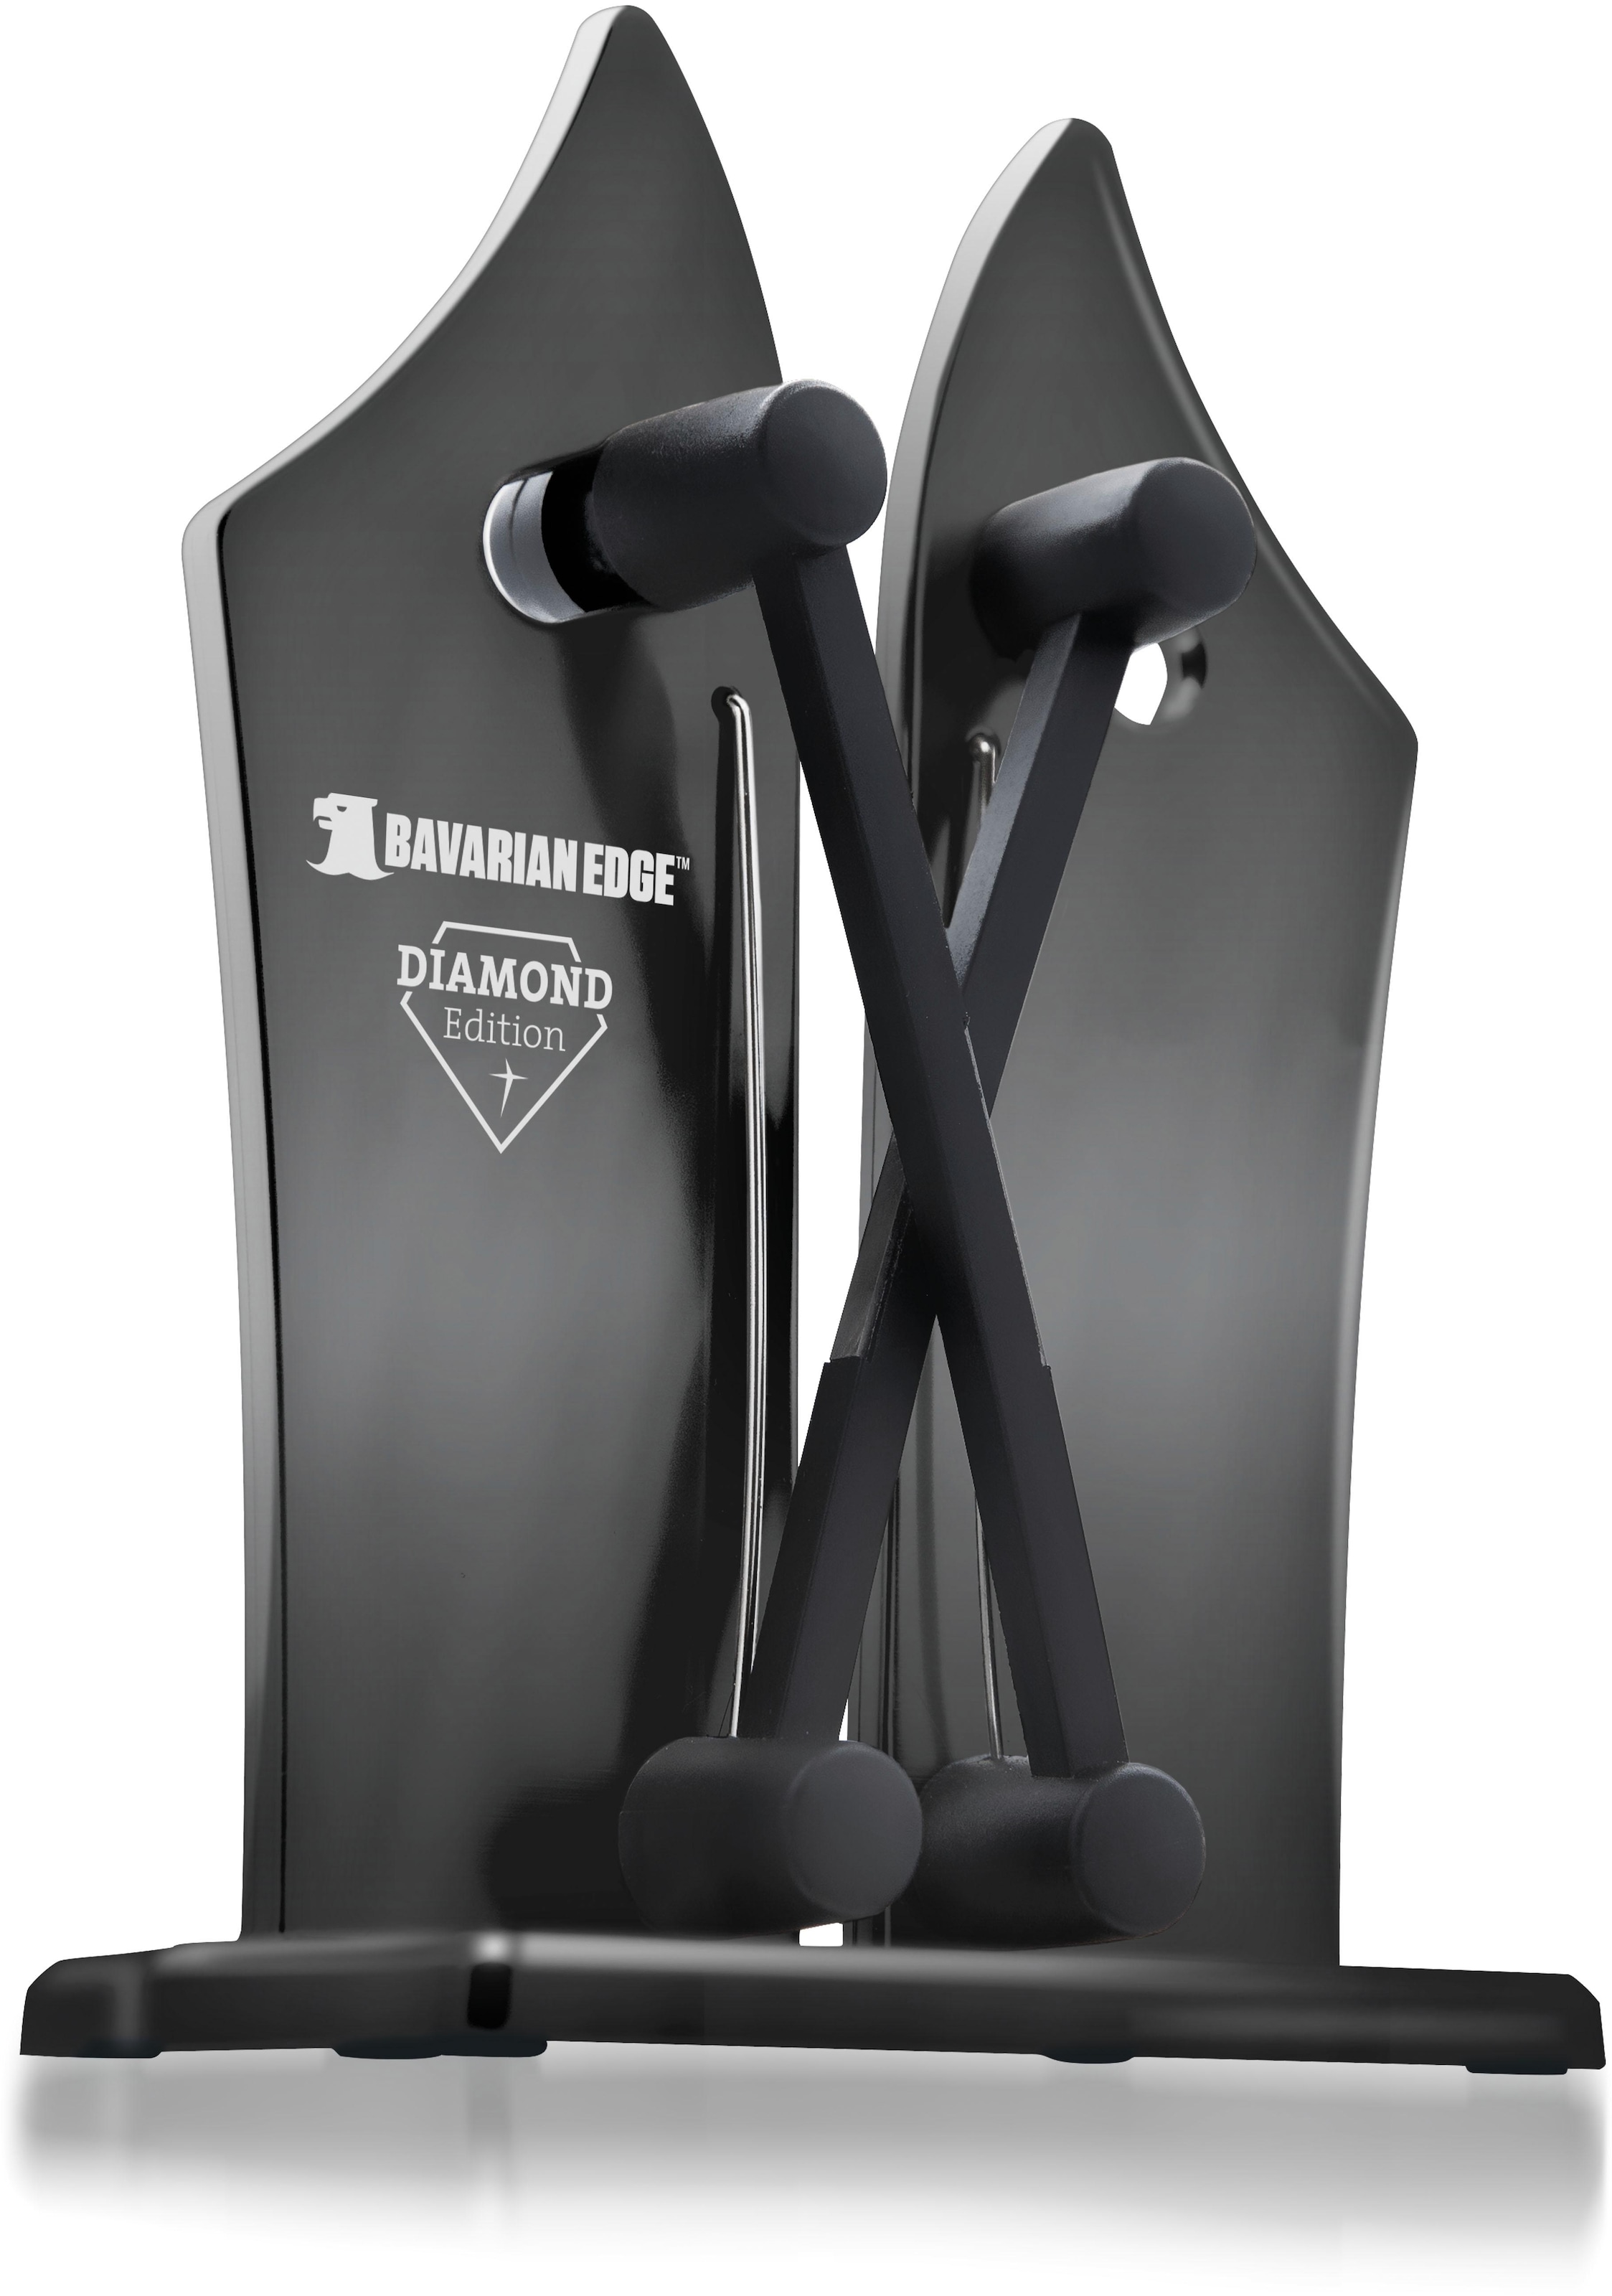 MediaShop Messerschärfer »Bavarian Edge Diamond Edition«, (1), X-Cross-Technologie